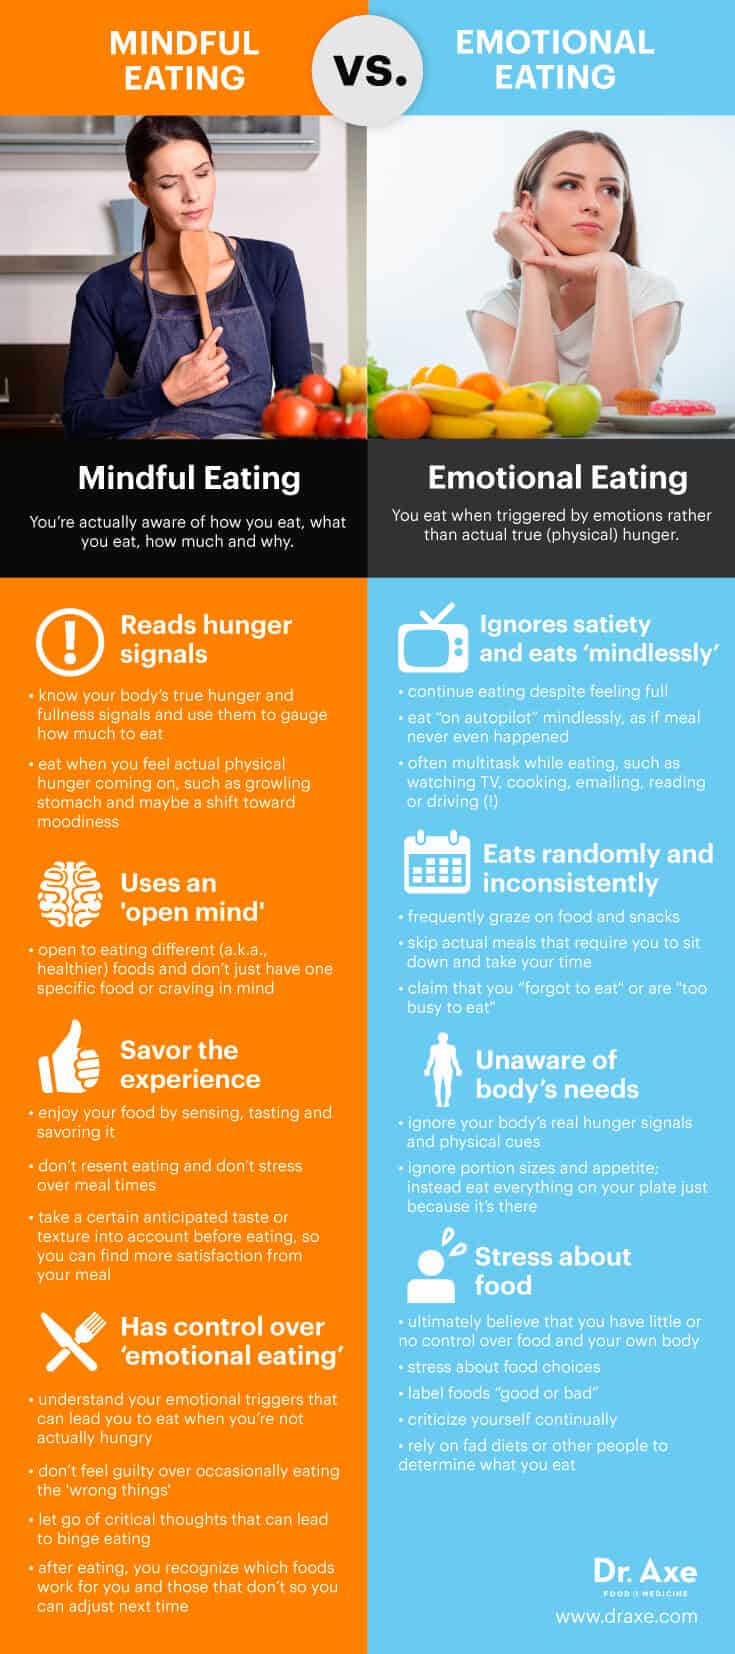 Mindful eating vs. emotional eating - Dr. Axe